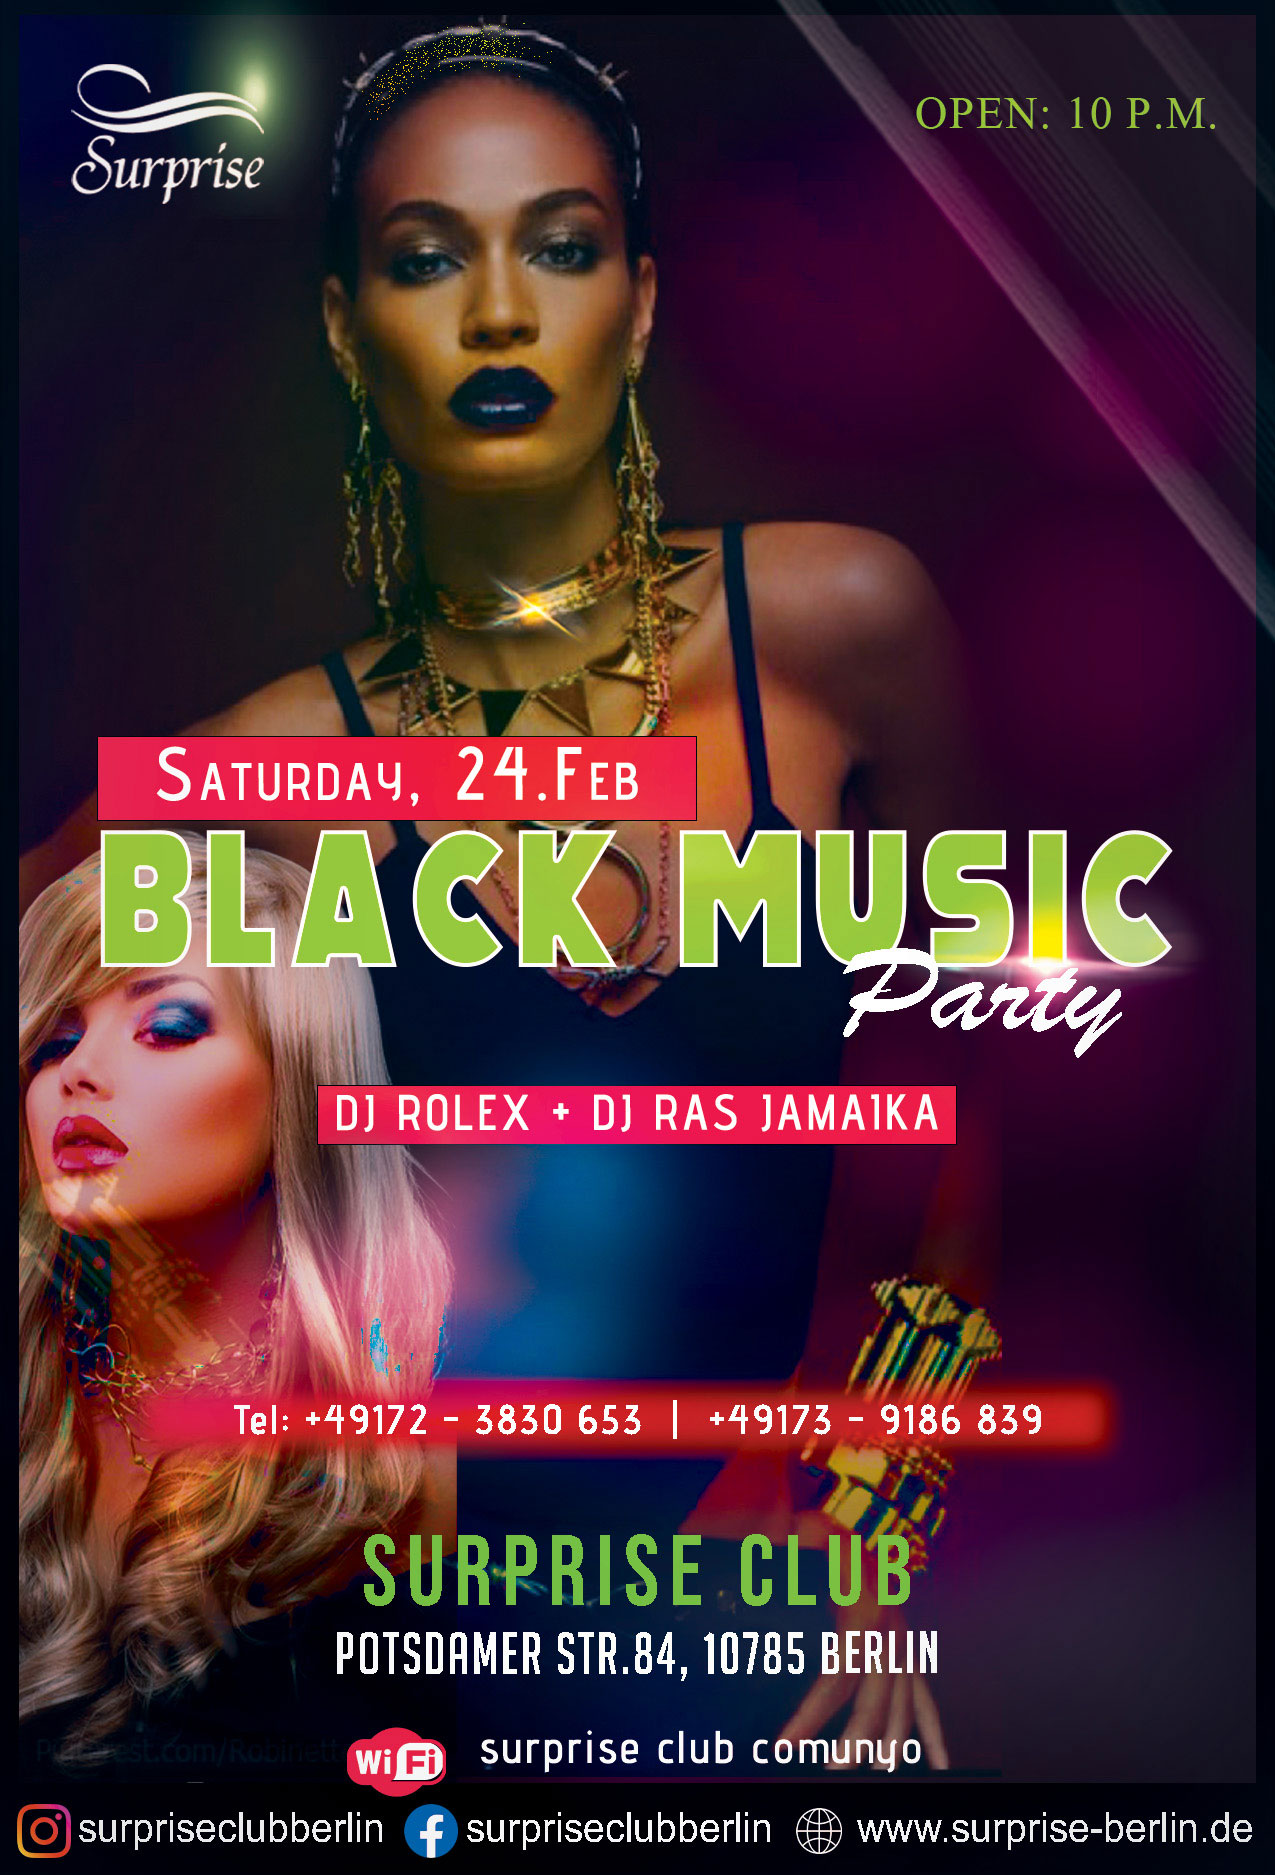 Black Music Party. Music Played: Dancehall, Salsa, Afrobeat, Hip Hop, Reggae, Party in Berlin, night club Berlin